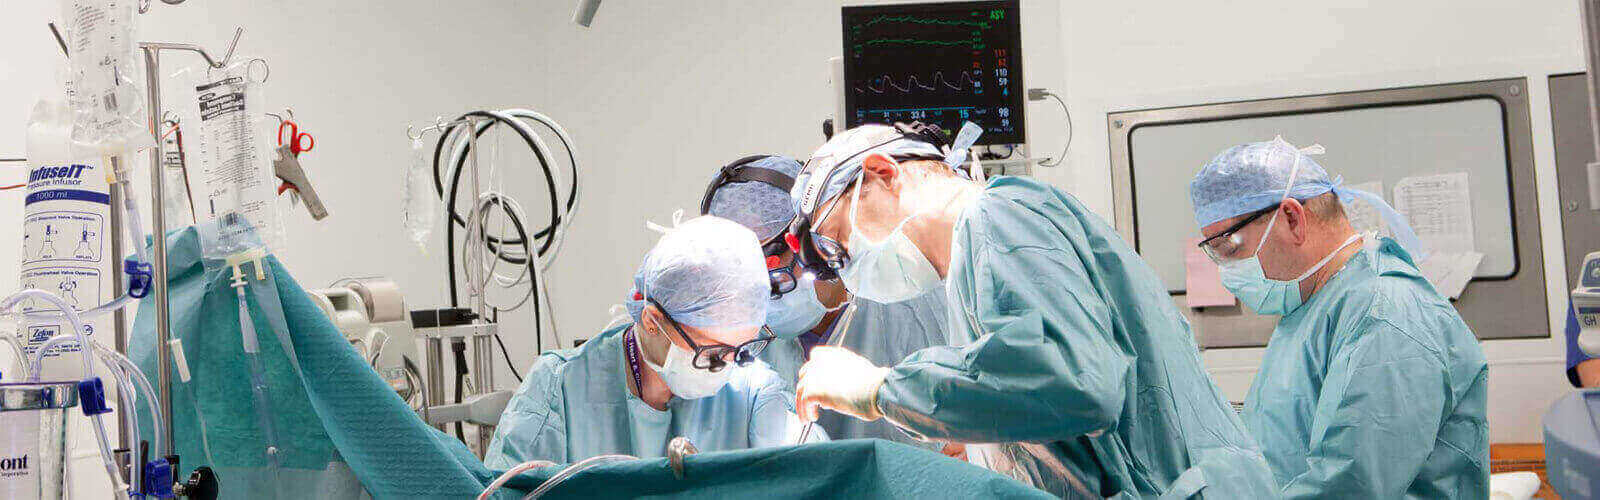 Heart Surgery Or Cardiac Surgery in Costa Rica